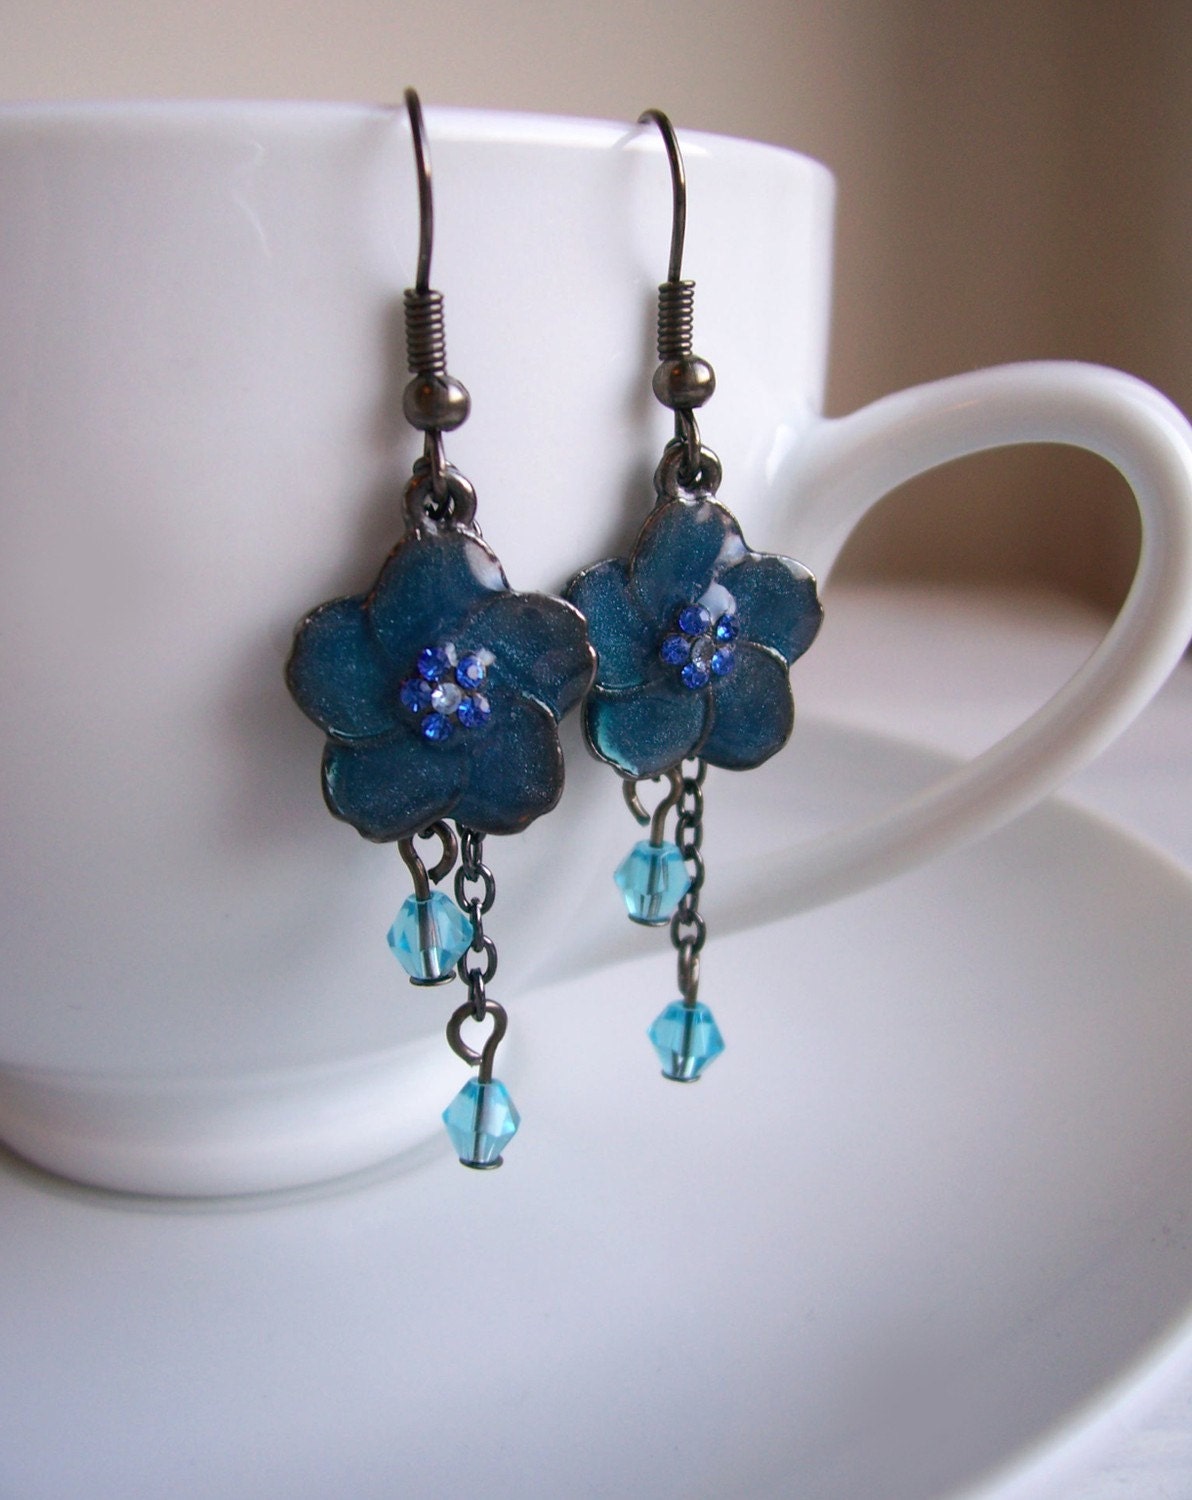 Blue Blossoms earrings - blue enammeled flowers with blue Swarovski crystals - handmade